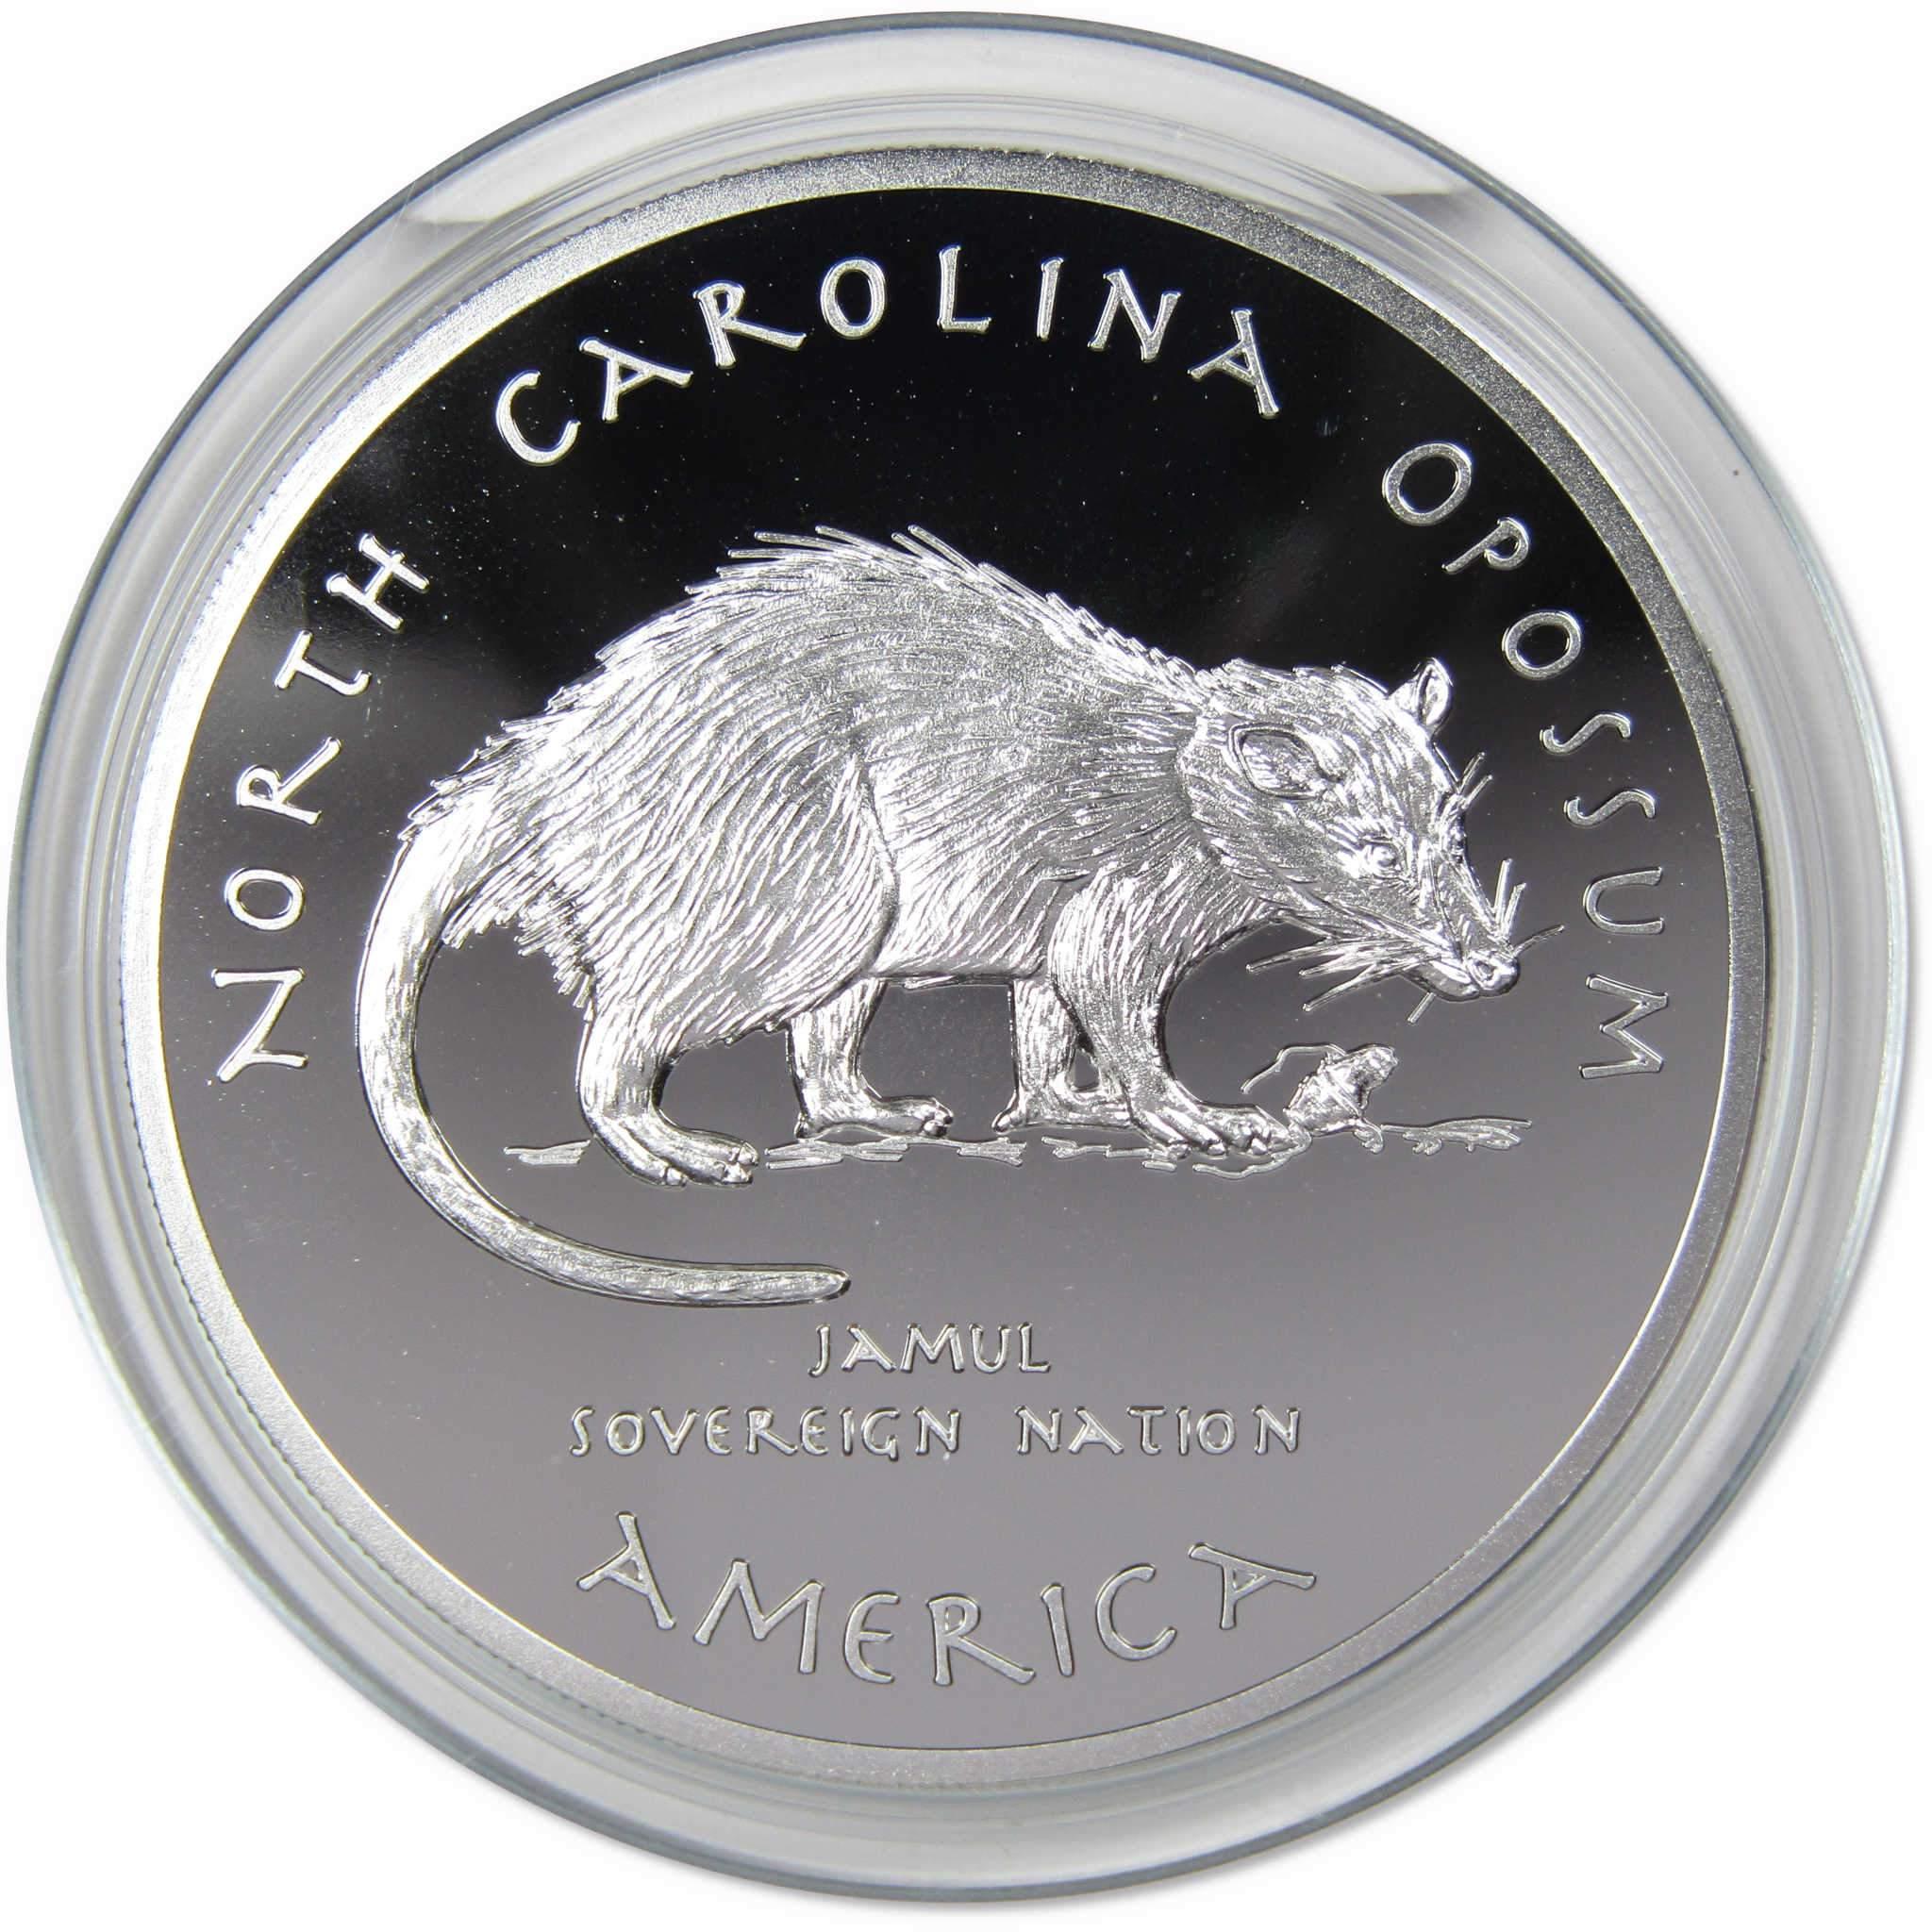 2020 Native American Jamul Tuscarora Opossum 1 oz .999 Fine Silver $1 Proof